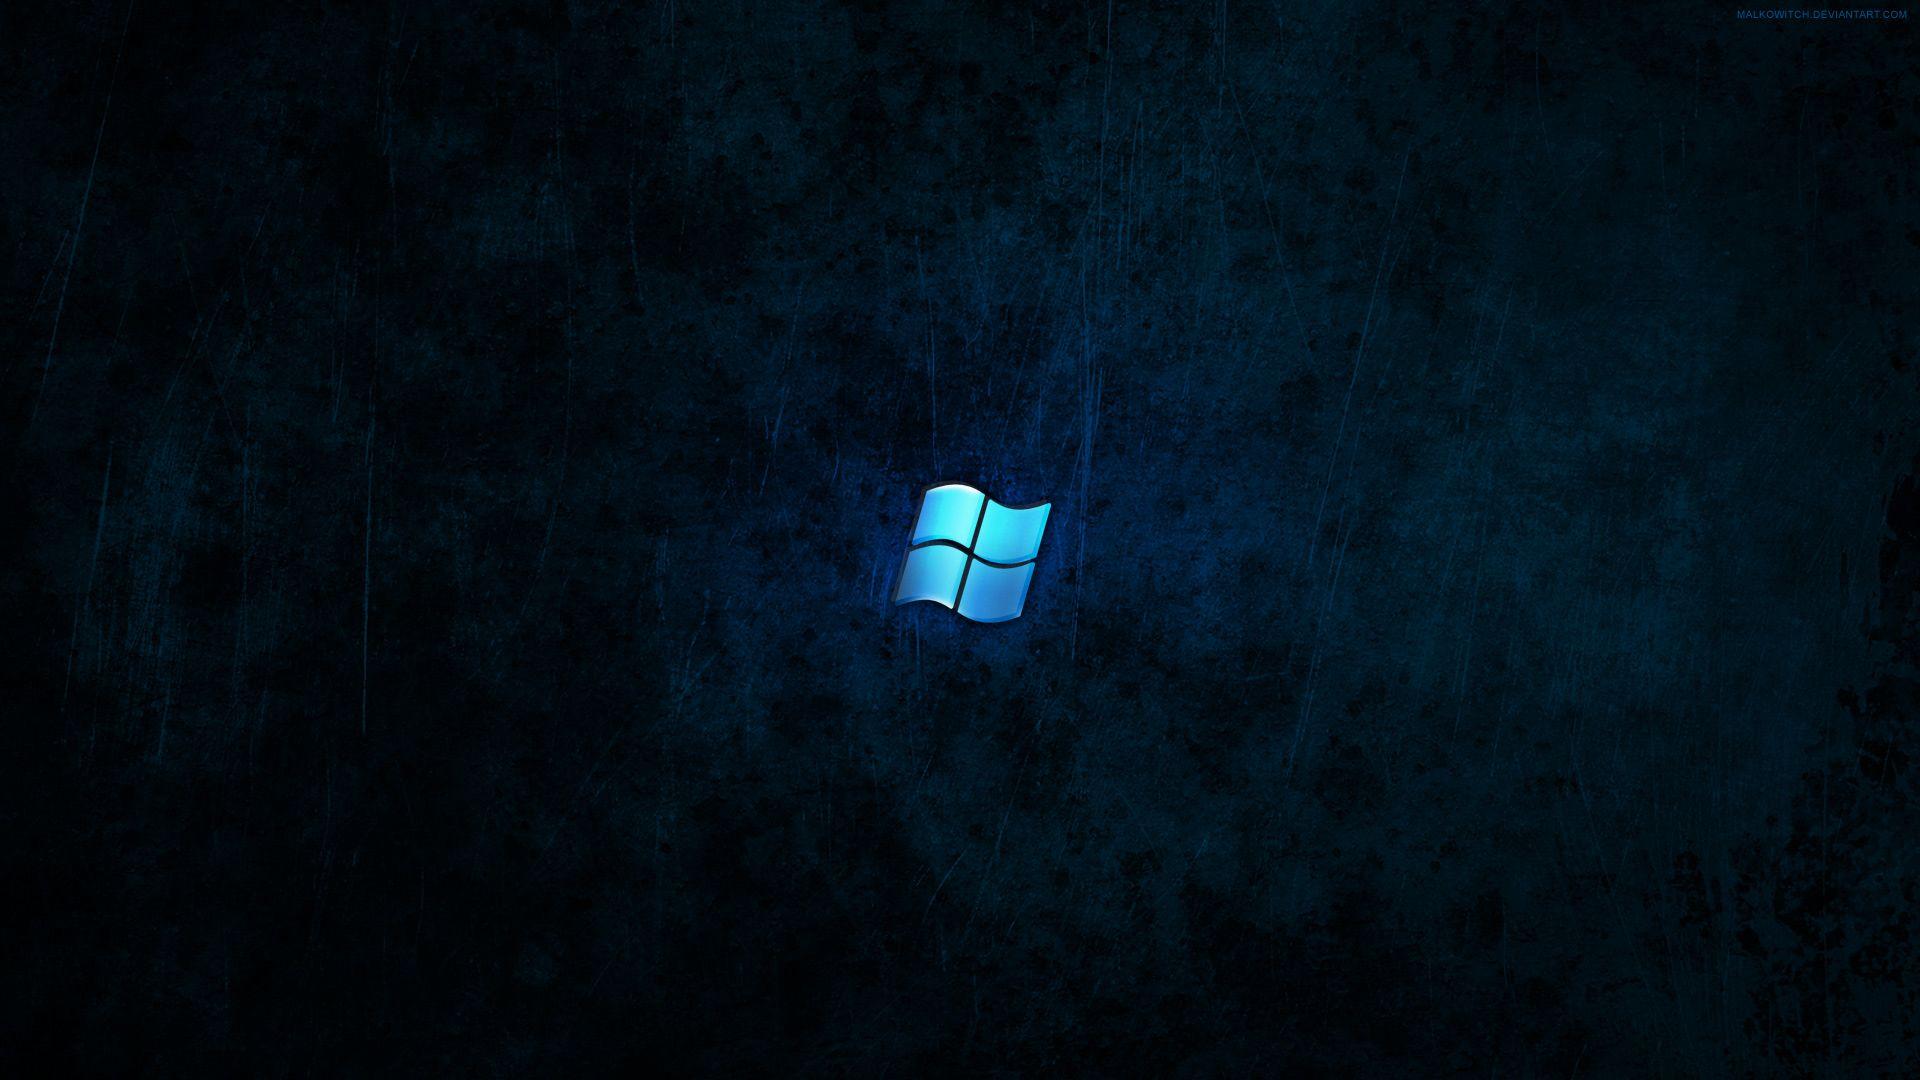 Dark Blue and Black Logo - Black Windows Wallpaper